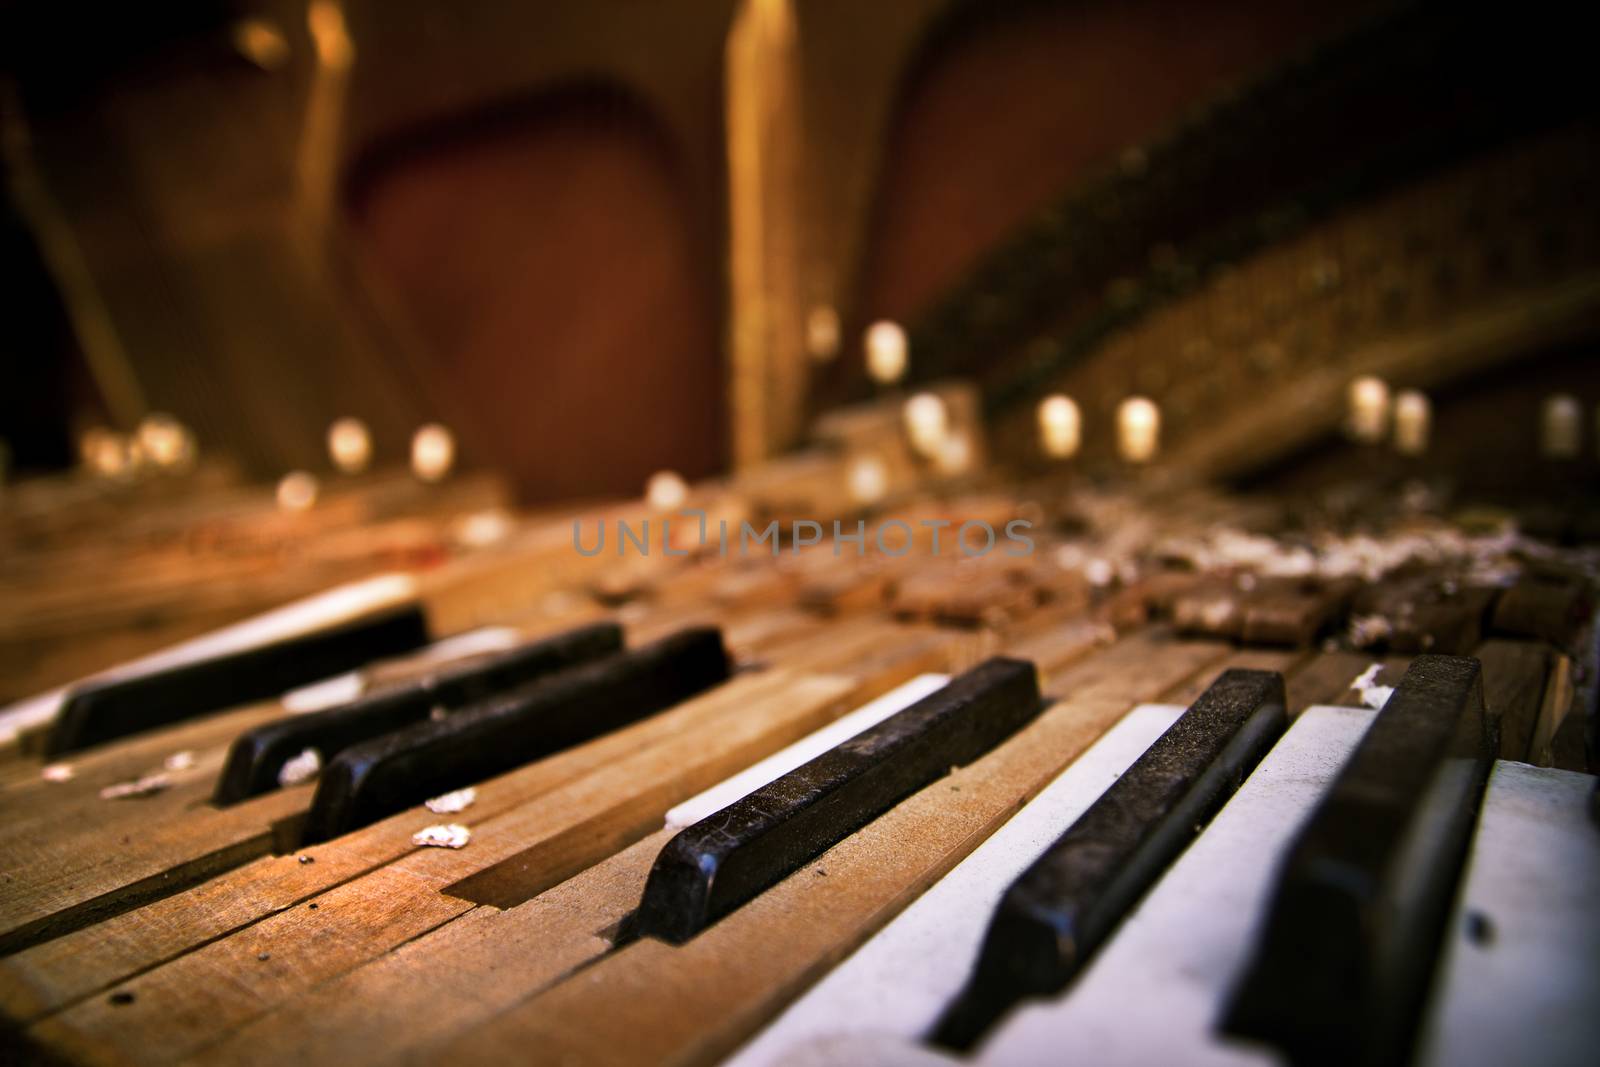 Keyboard of old broken piano (close-up view)